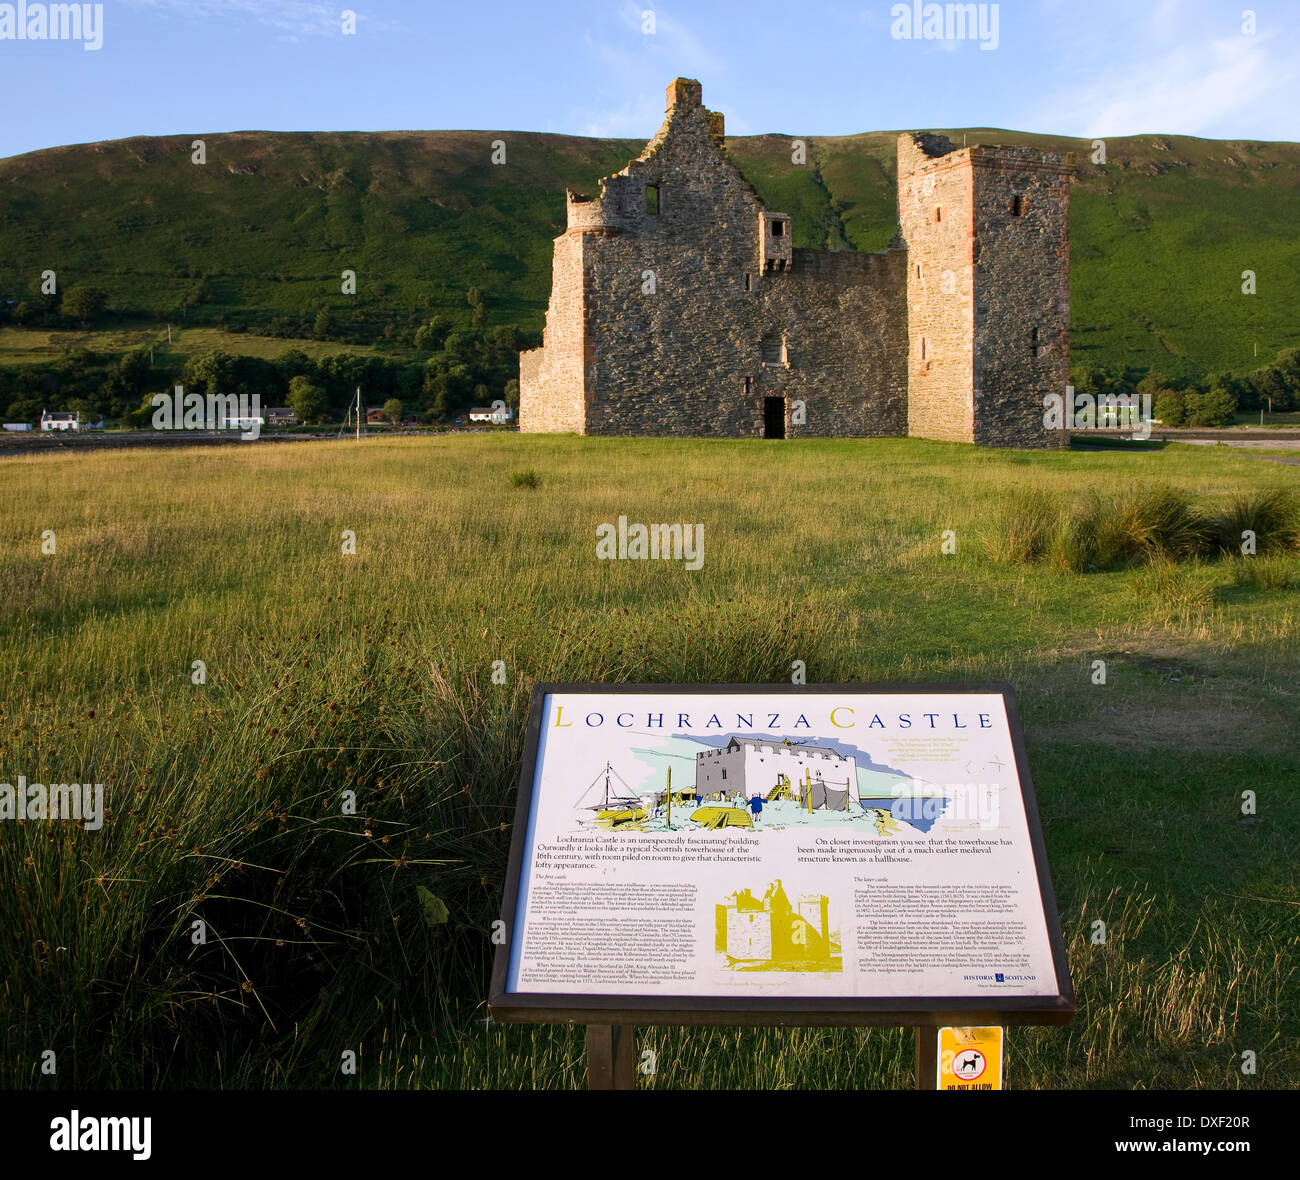 Lochranza castle ruins from information board,Island of Arran Stock Photo